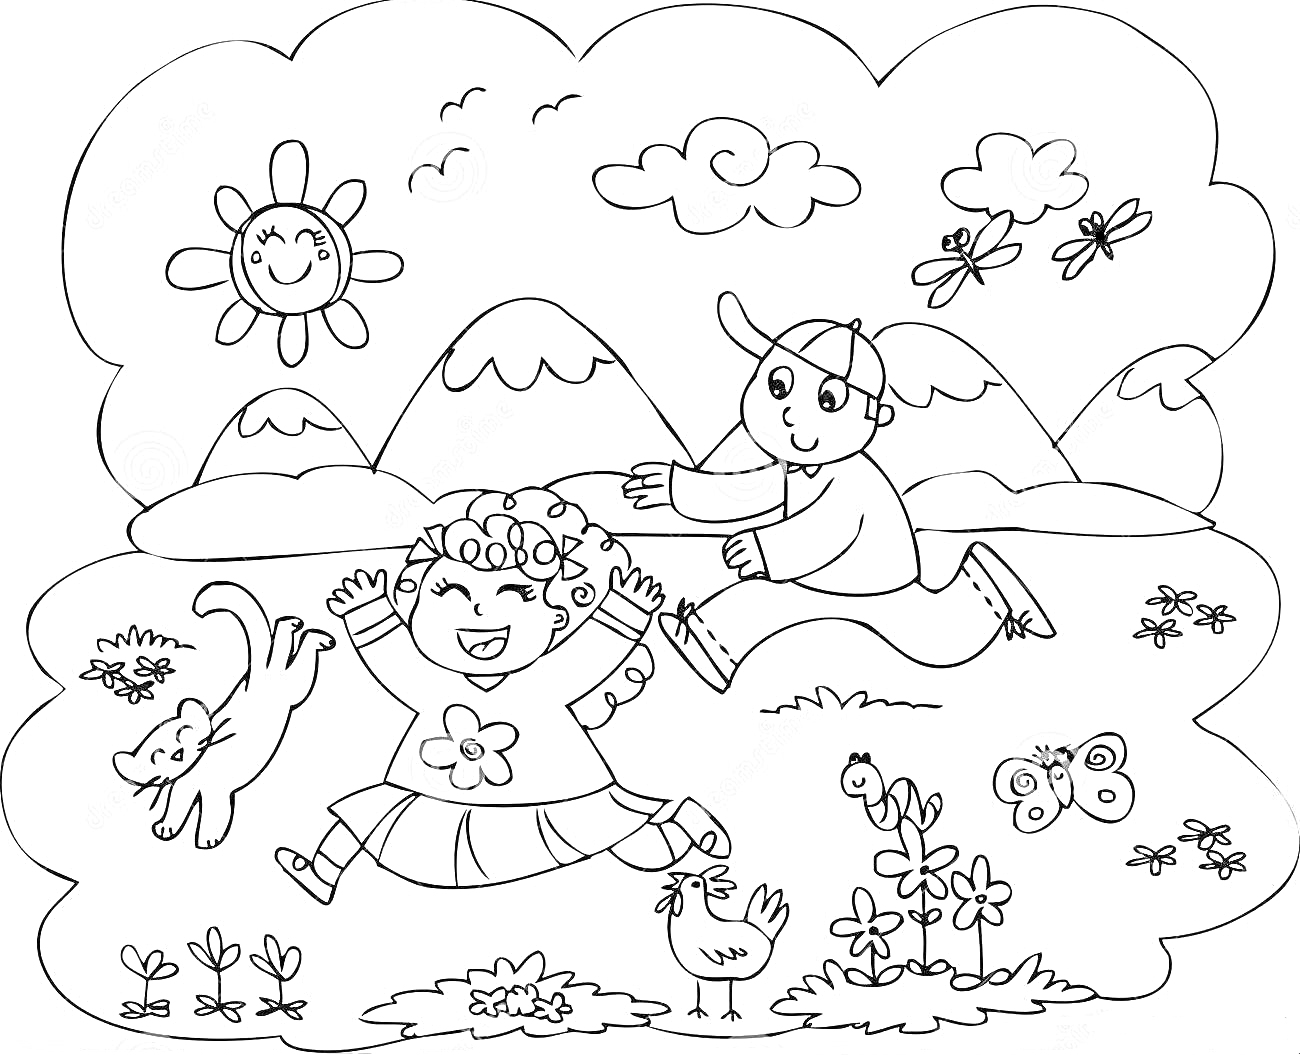 Дети, кошка, курица, цветы, бабочки и стрекозы на поляне с горами на фоне и улыбающимся солнцем